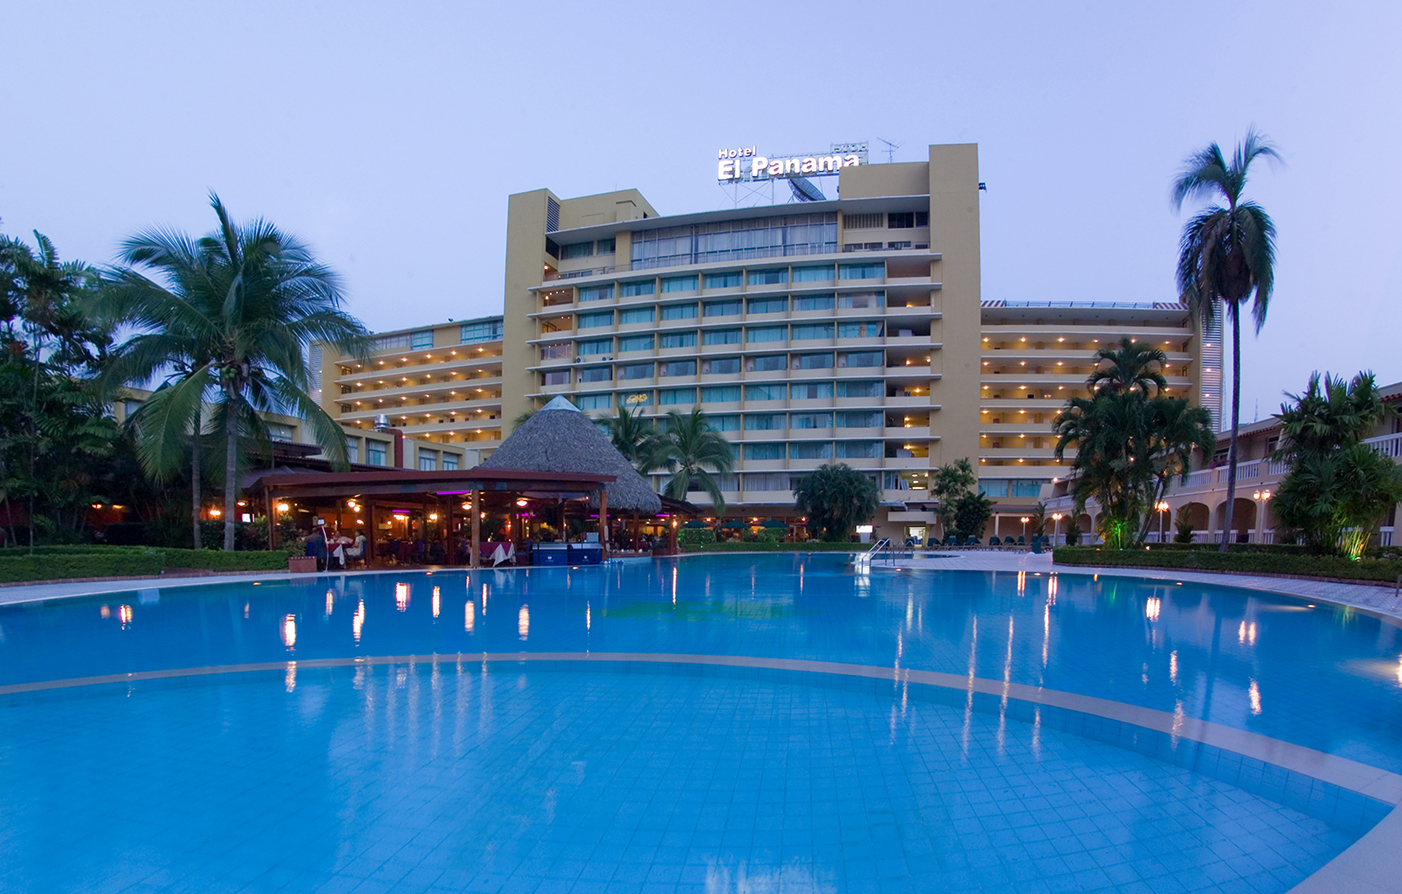 El Panama Hotel | Luxury Panama City Hotel